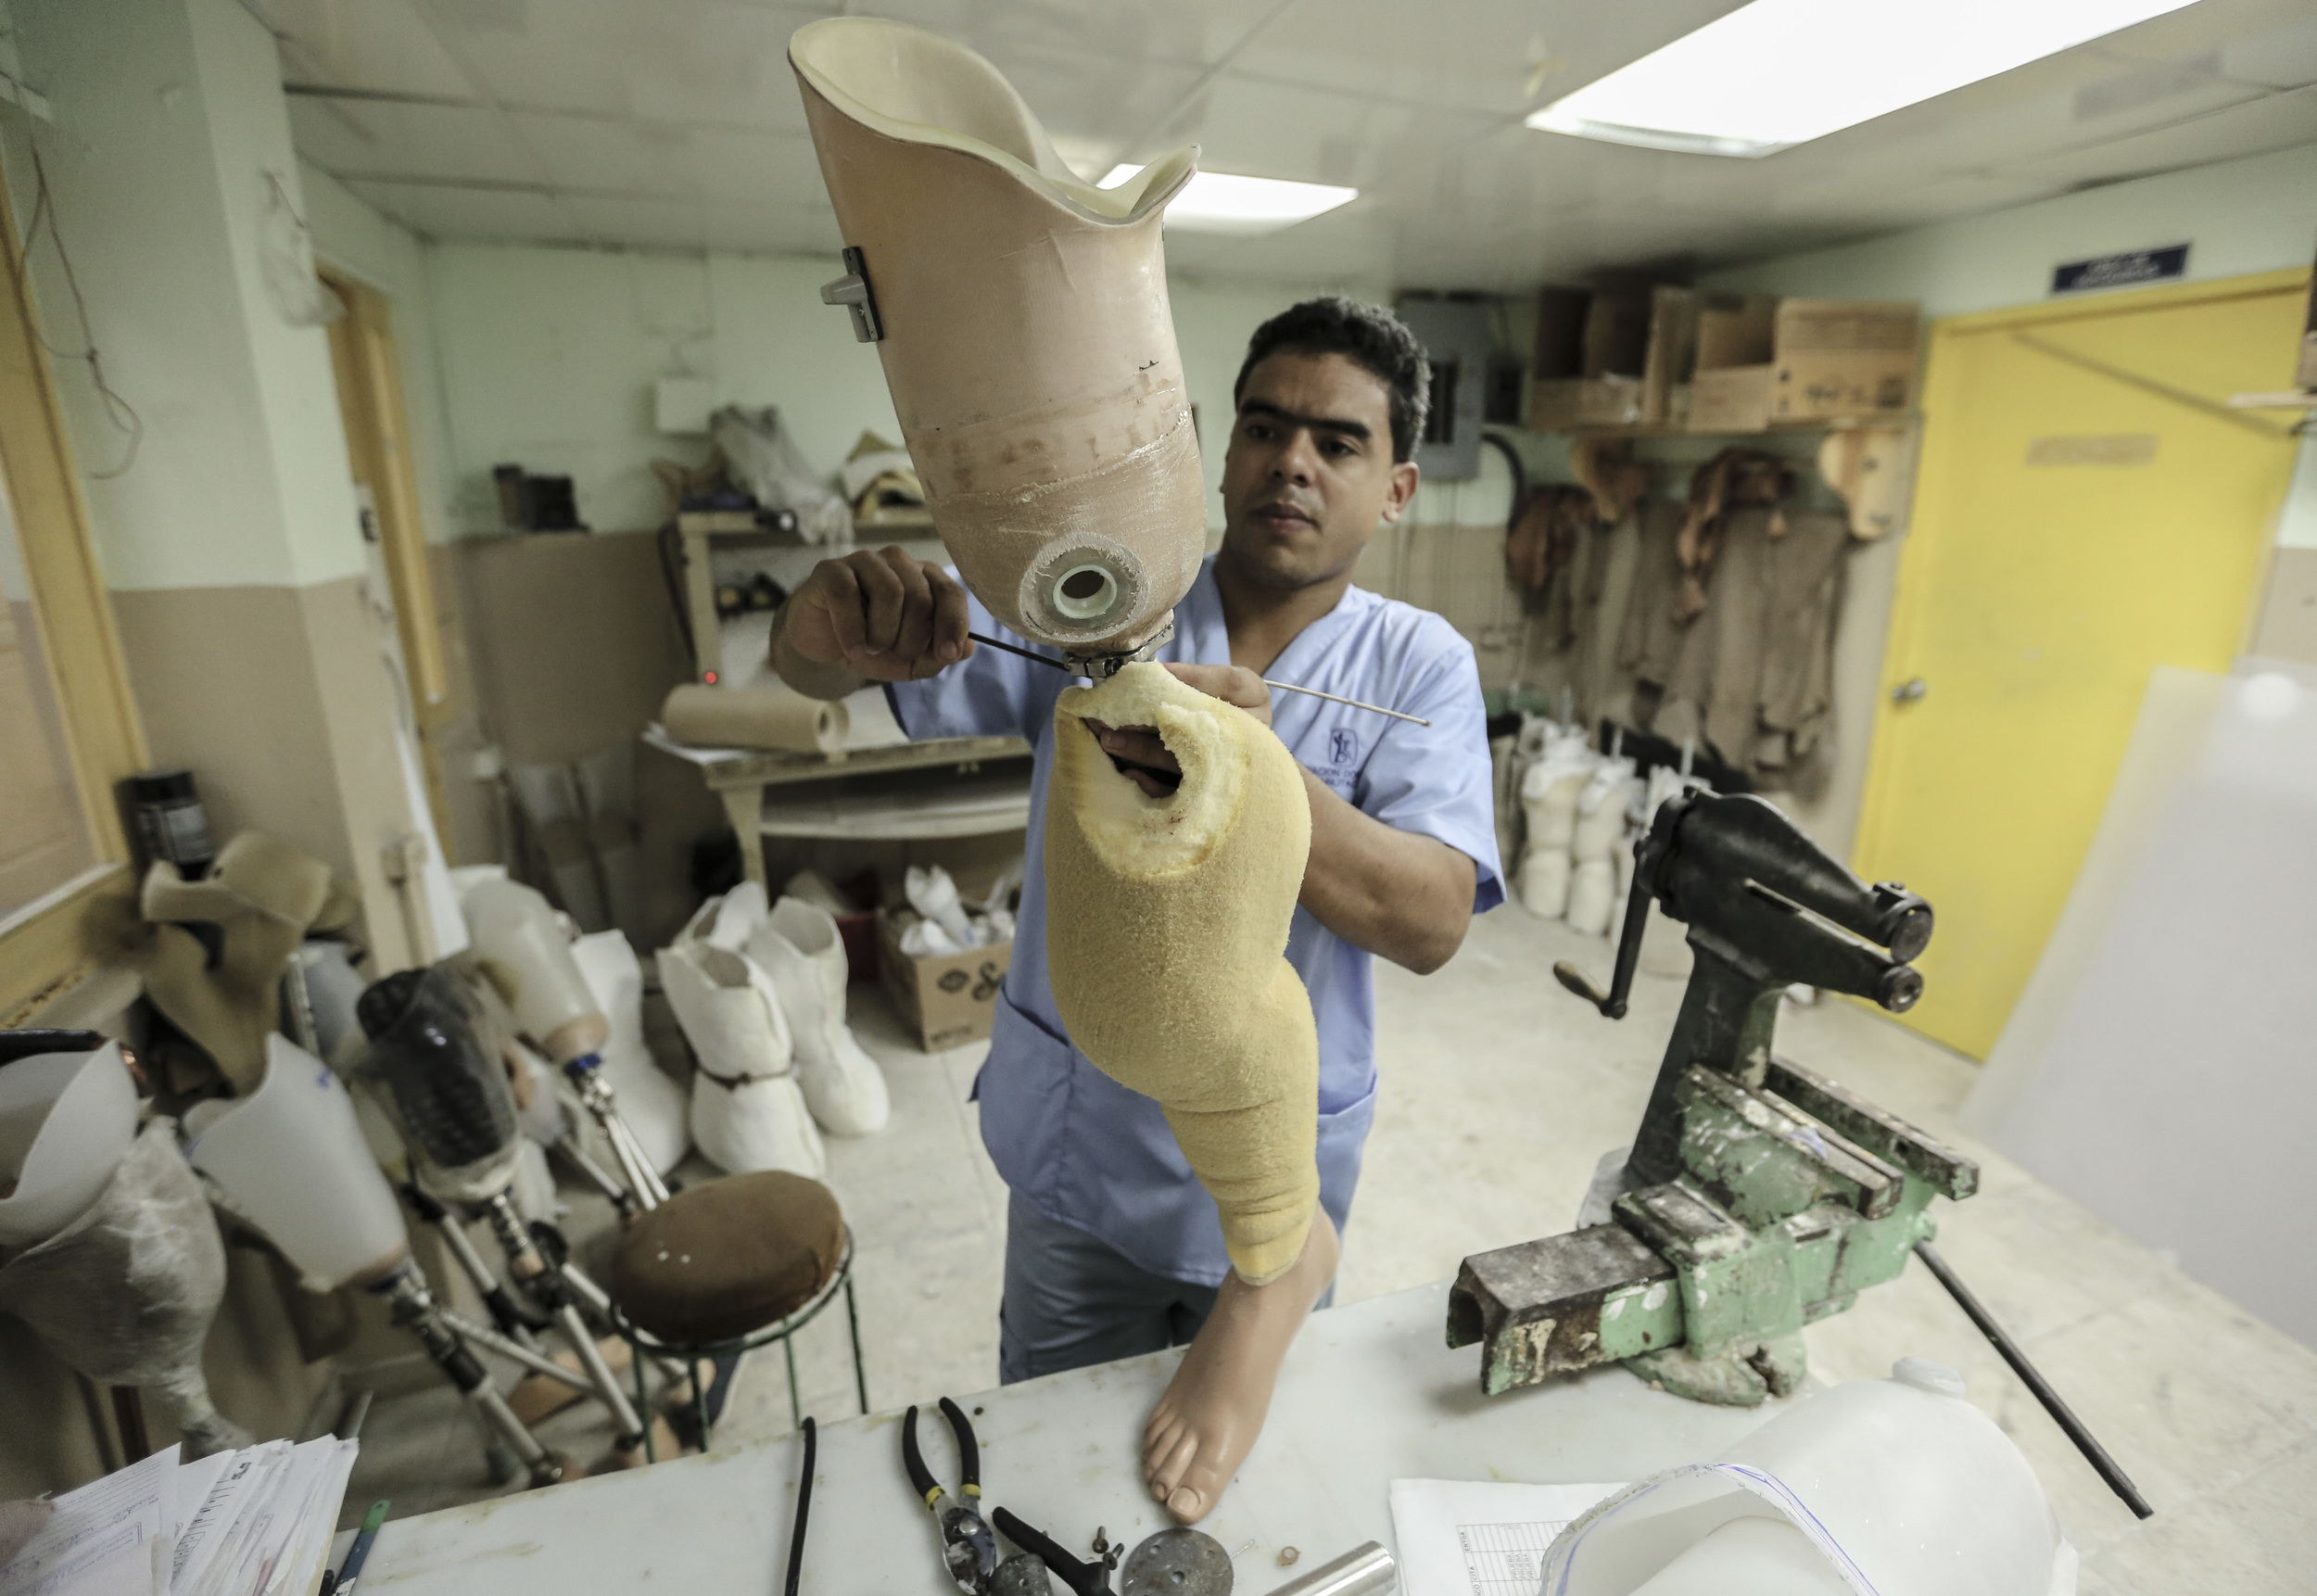  Working on prosthetics in Santo Domingo, Dominican Republic. 